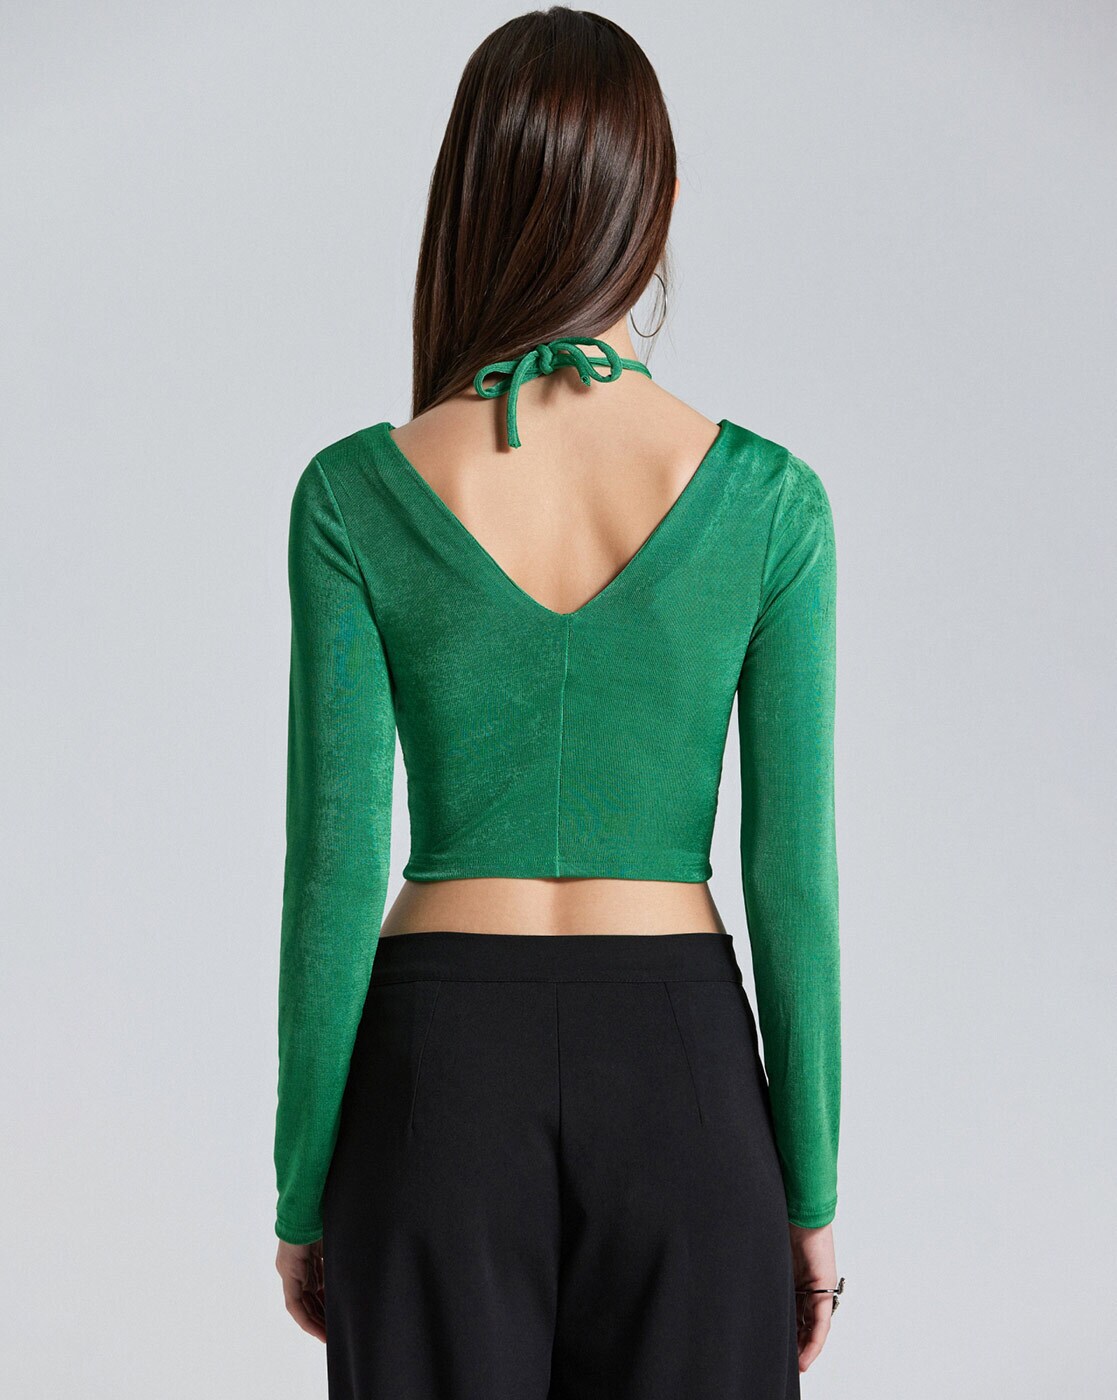 Buy Green Tops for Women by SAM Online